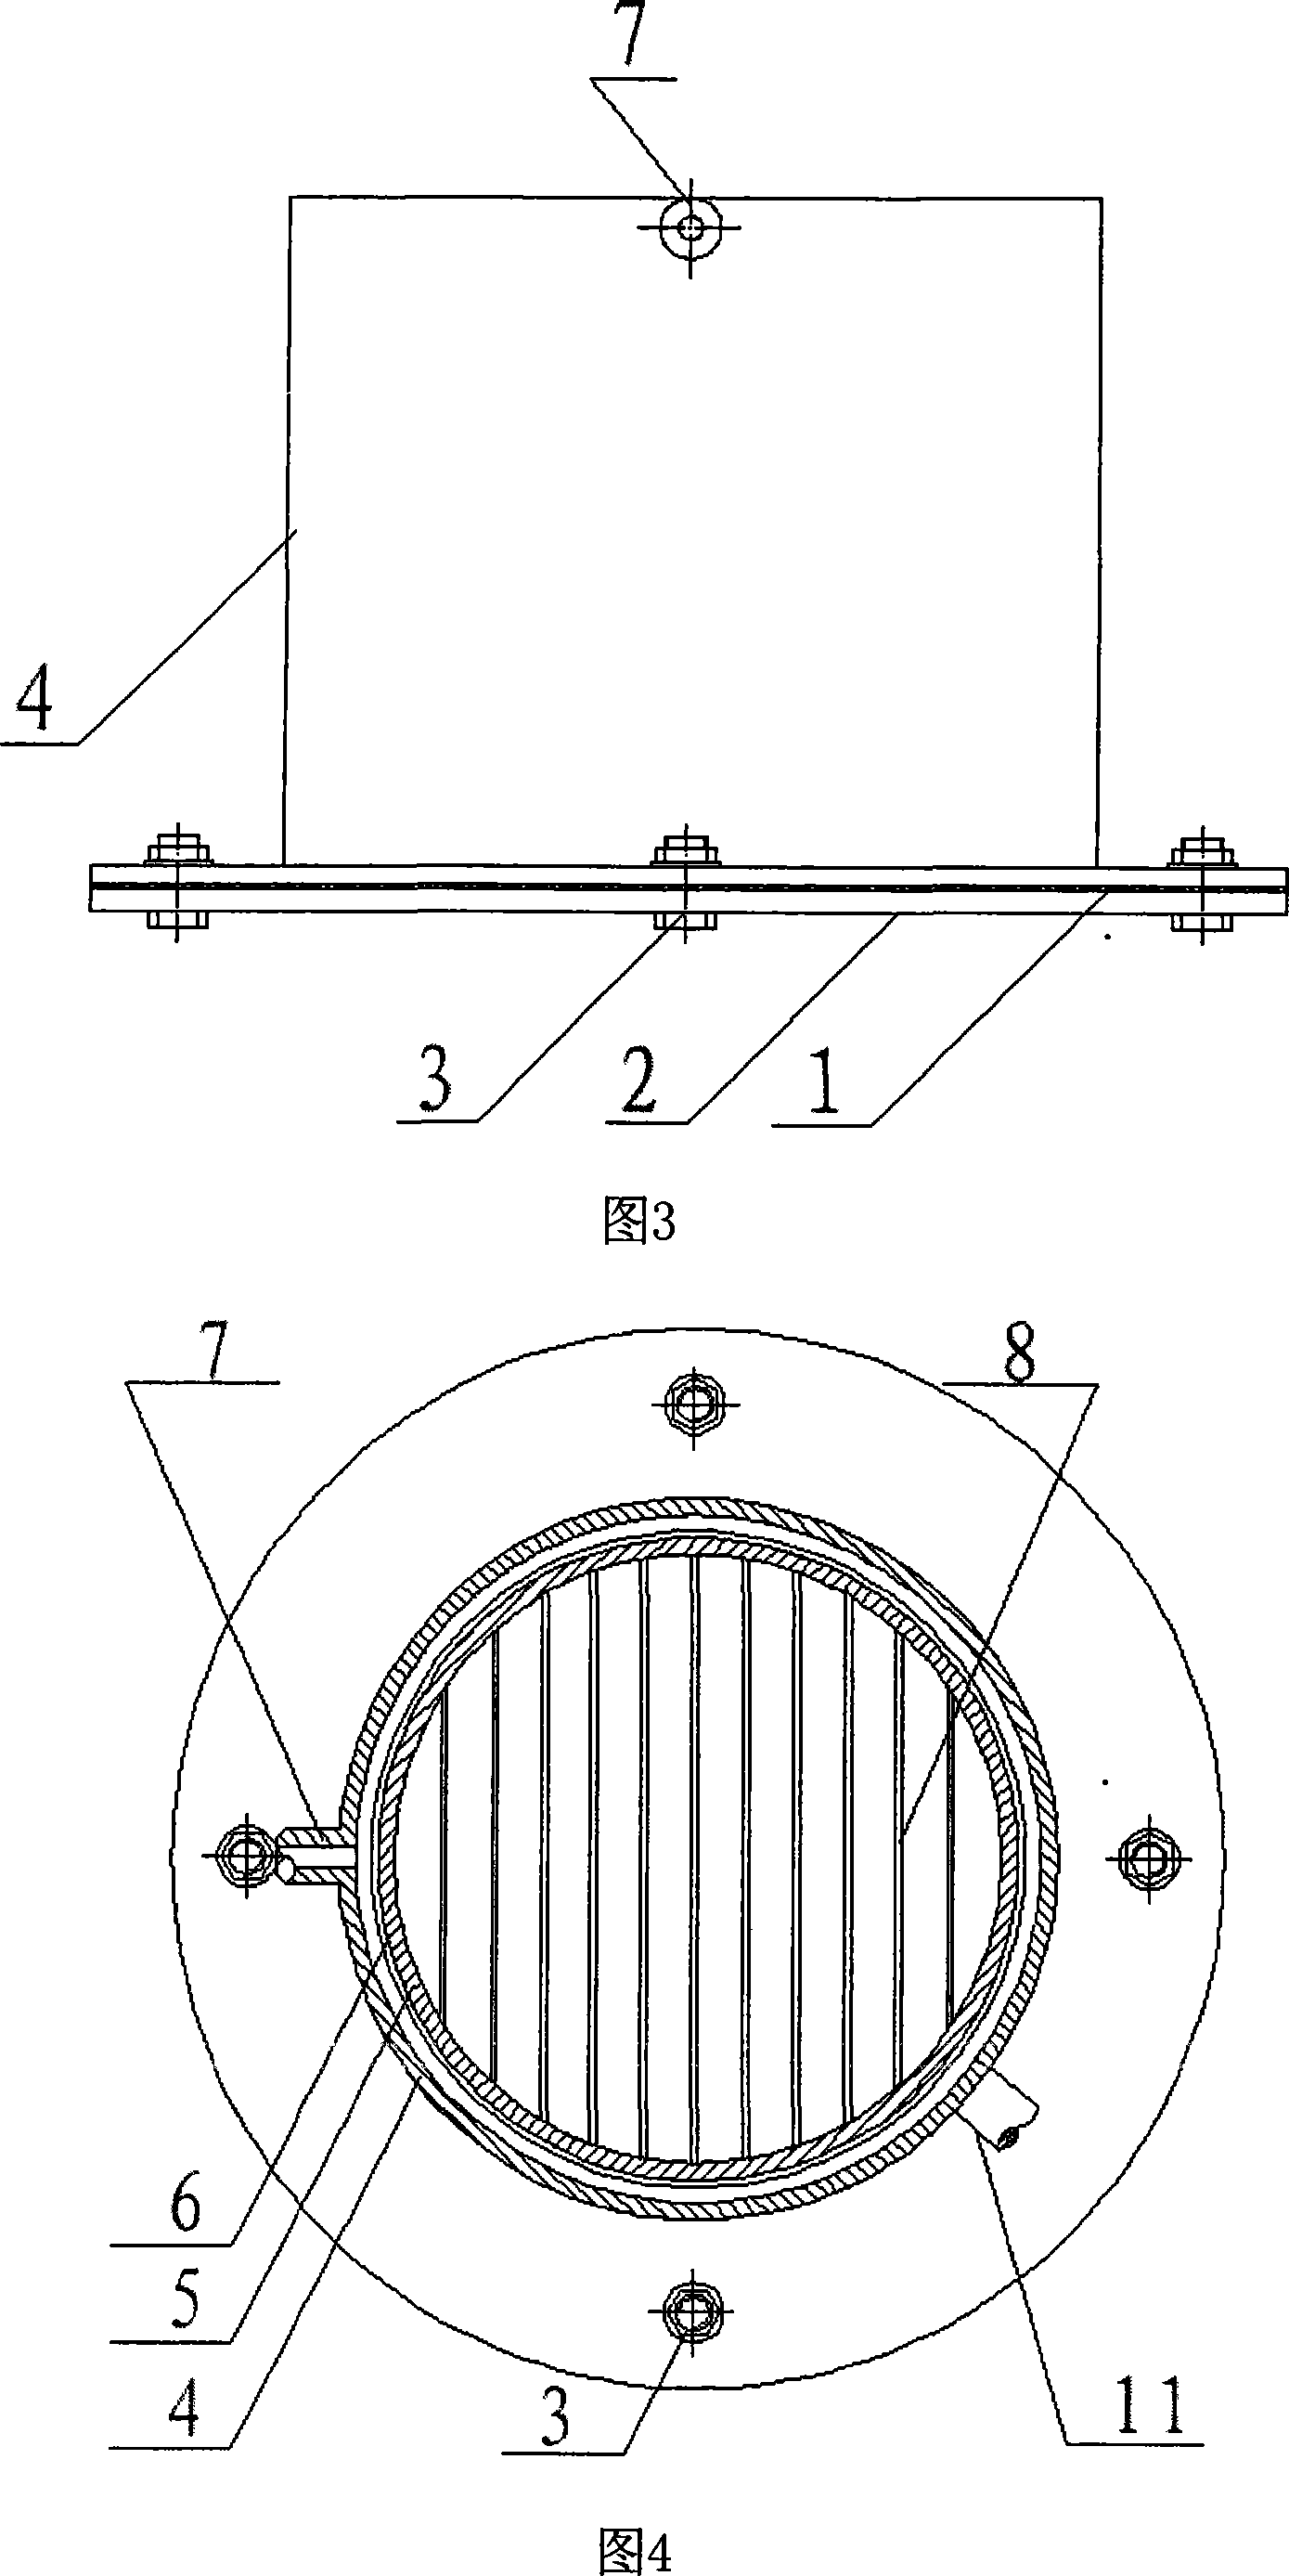 Micro-via type chemical heat pump reactor